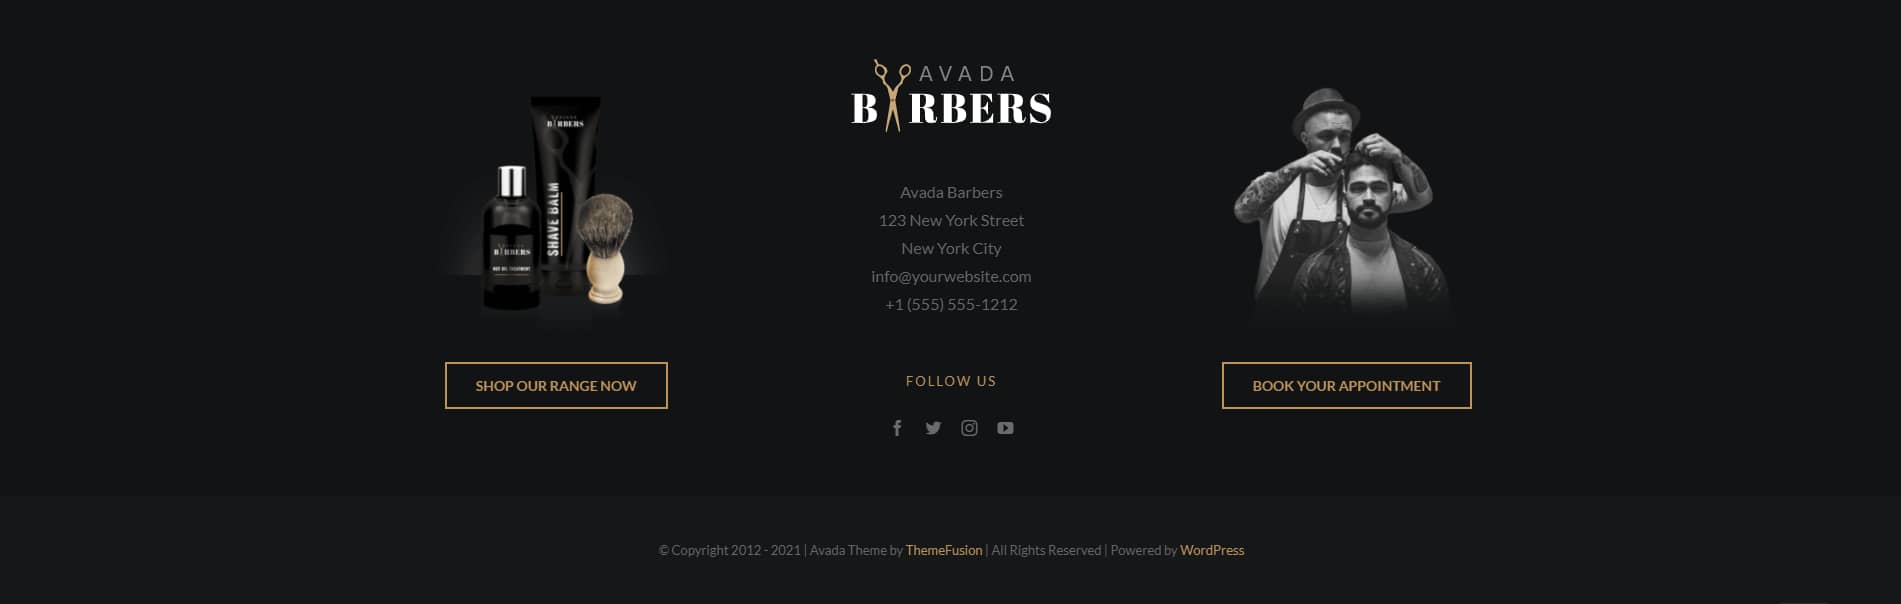 Avada Barbers Footer